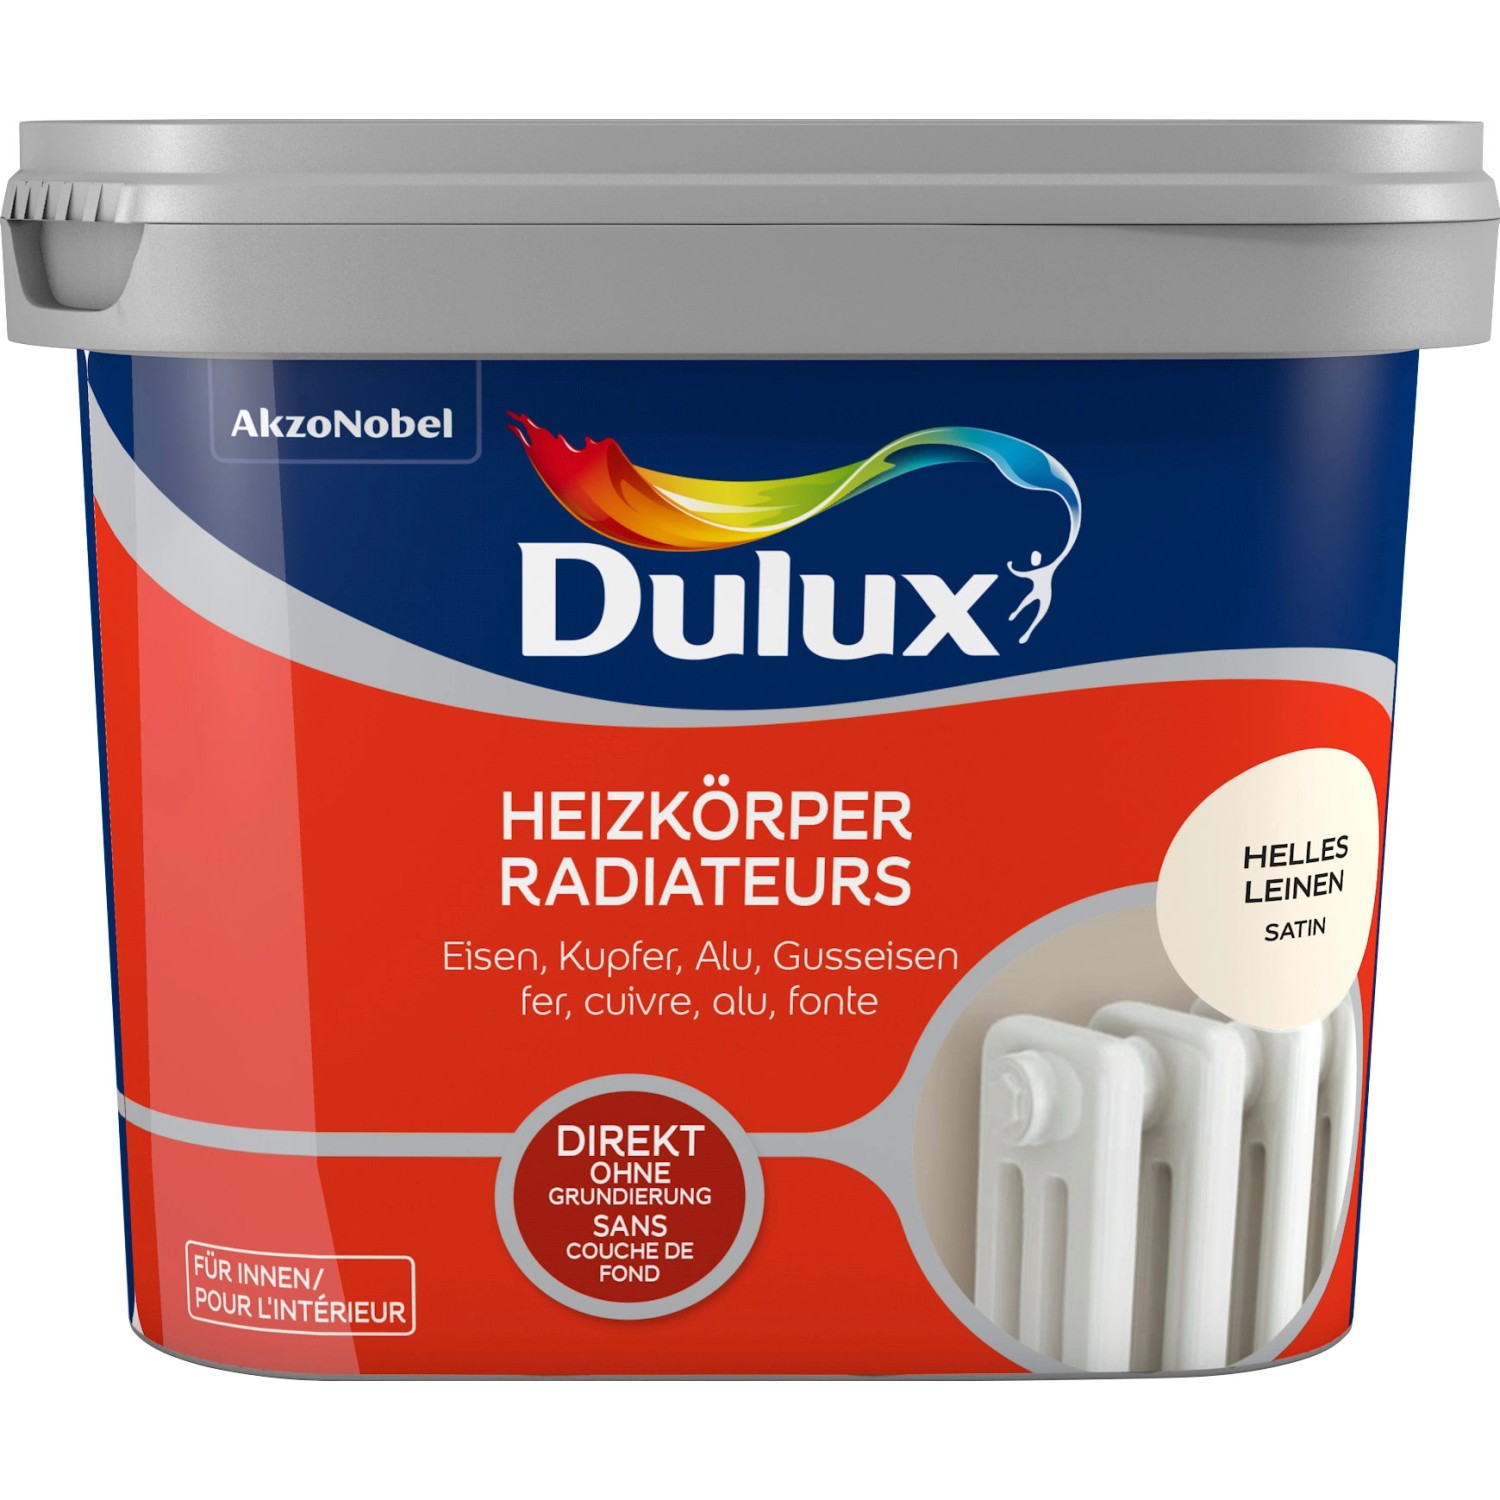 Dulux Fresh Up Heizkörperlack Satin Helles Leinen 750 ml